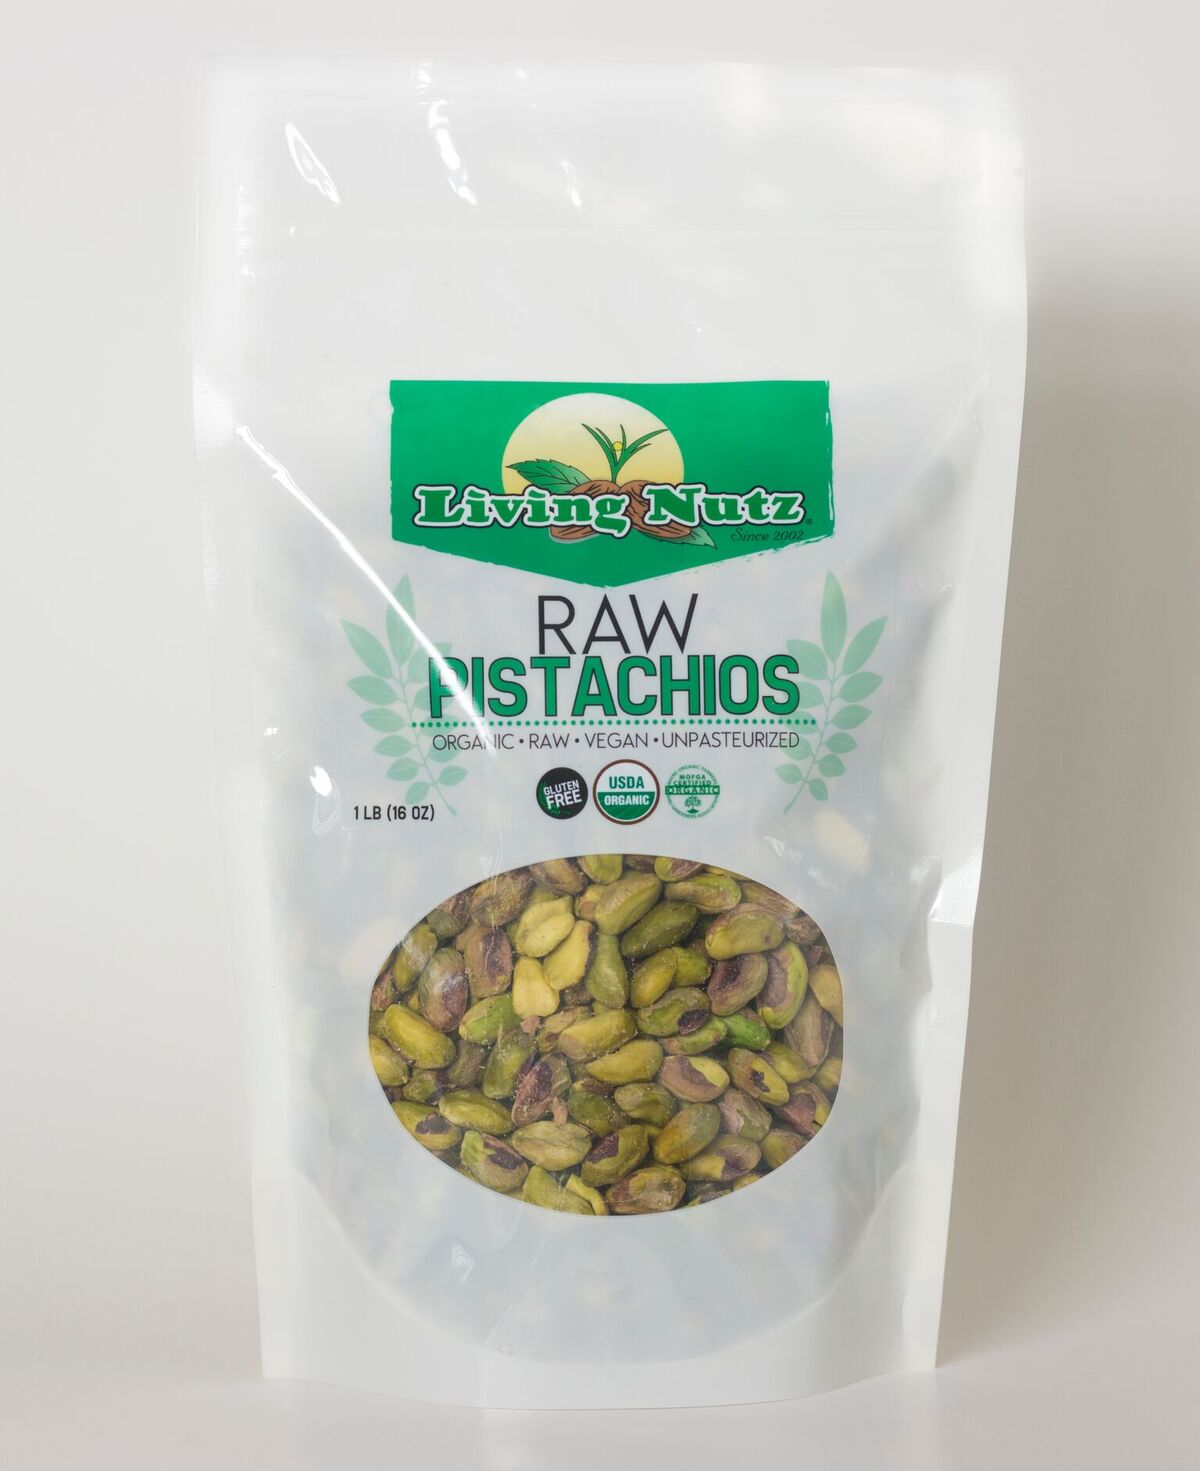 raw pistachios, organic shelled pistaschios